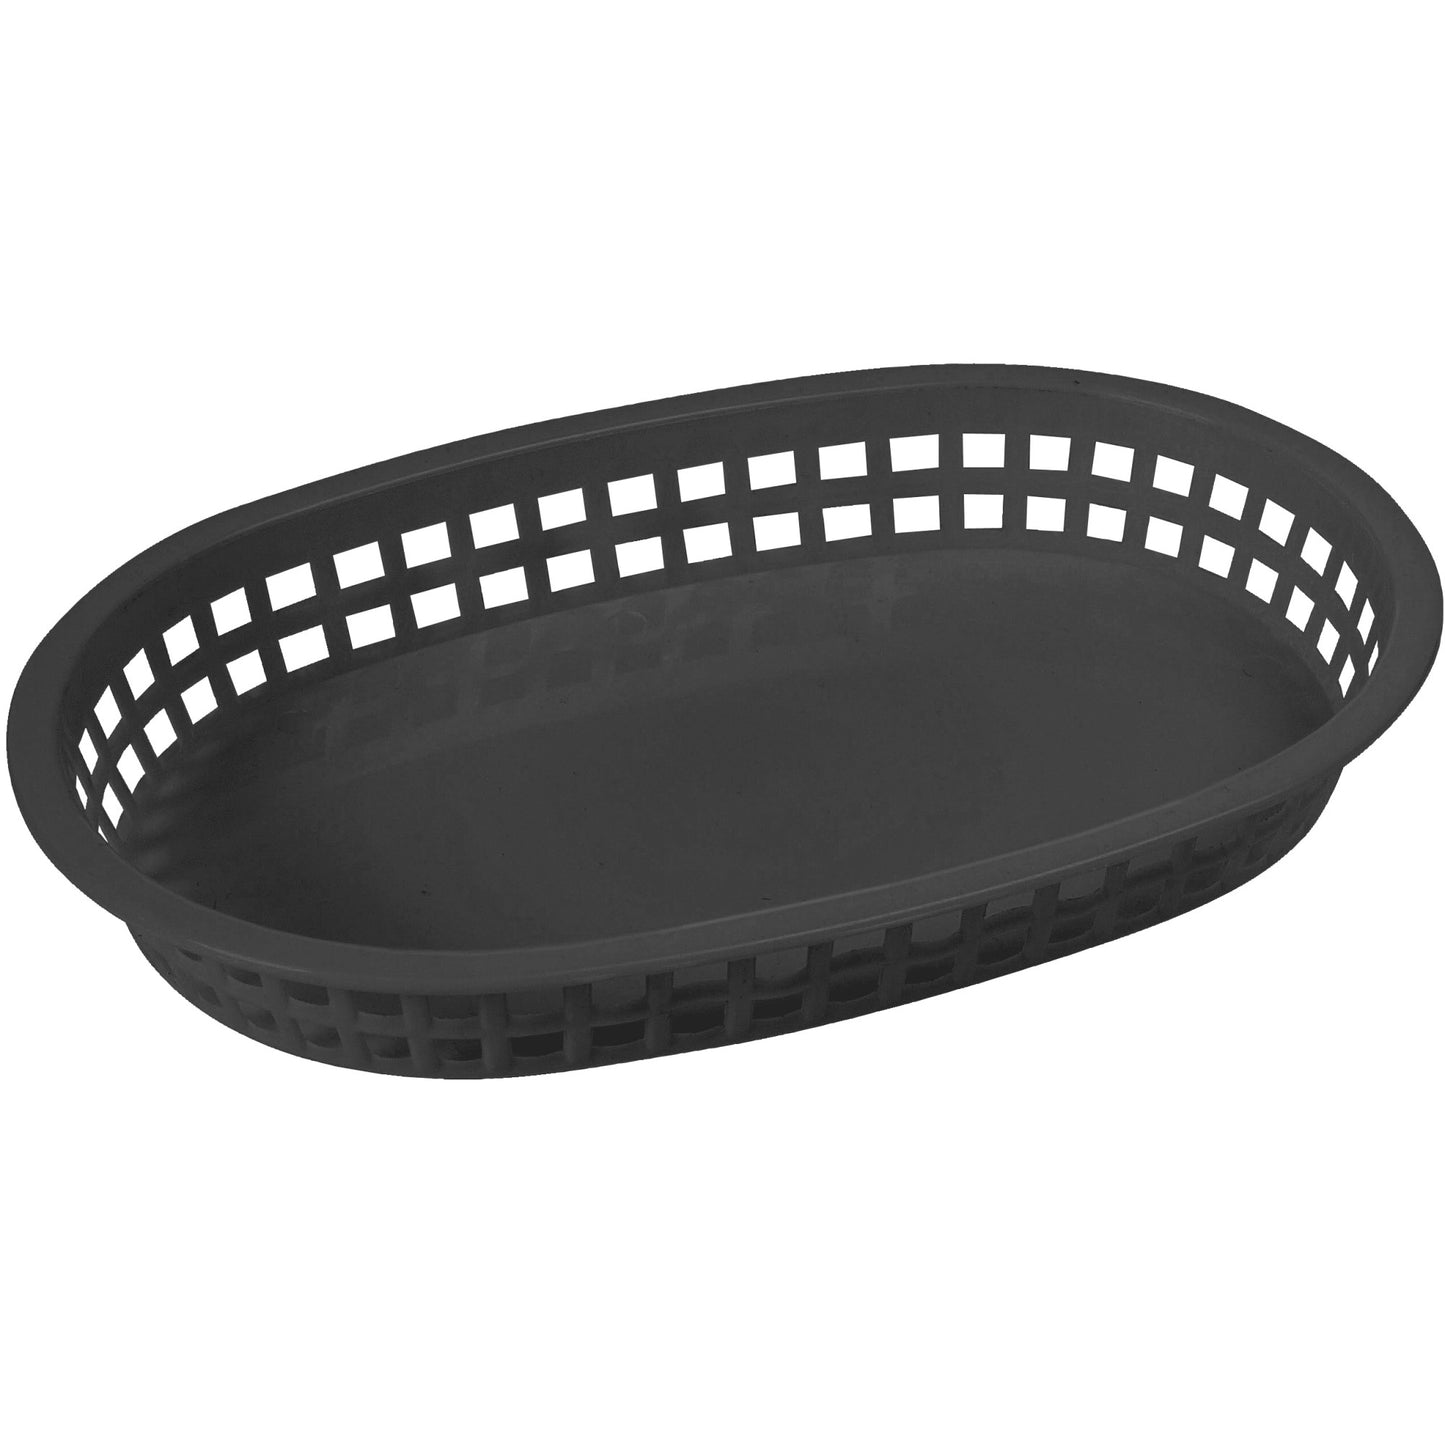 PLB-K - Oval Platter Baskets, 10-3/4" x 7-1/4" x 1-1/2" - Black